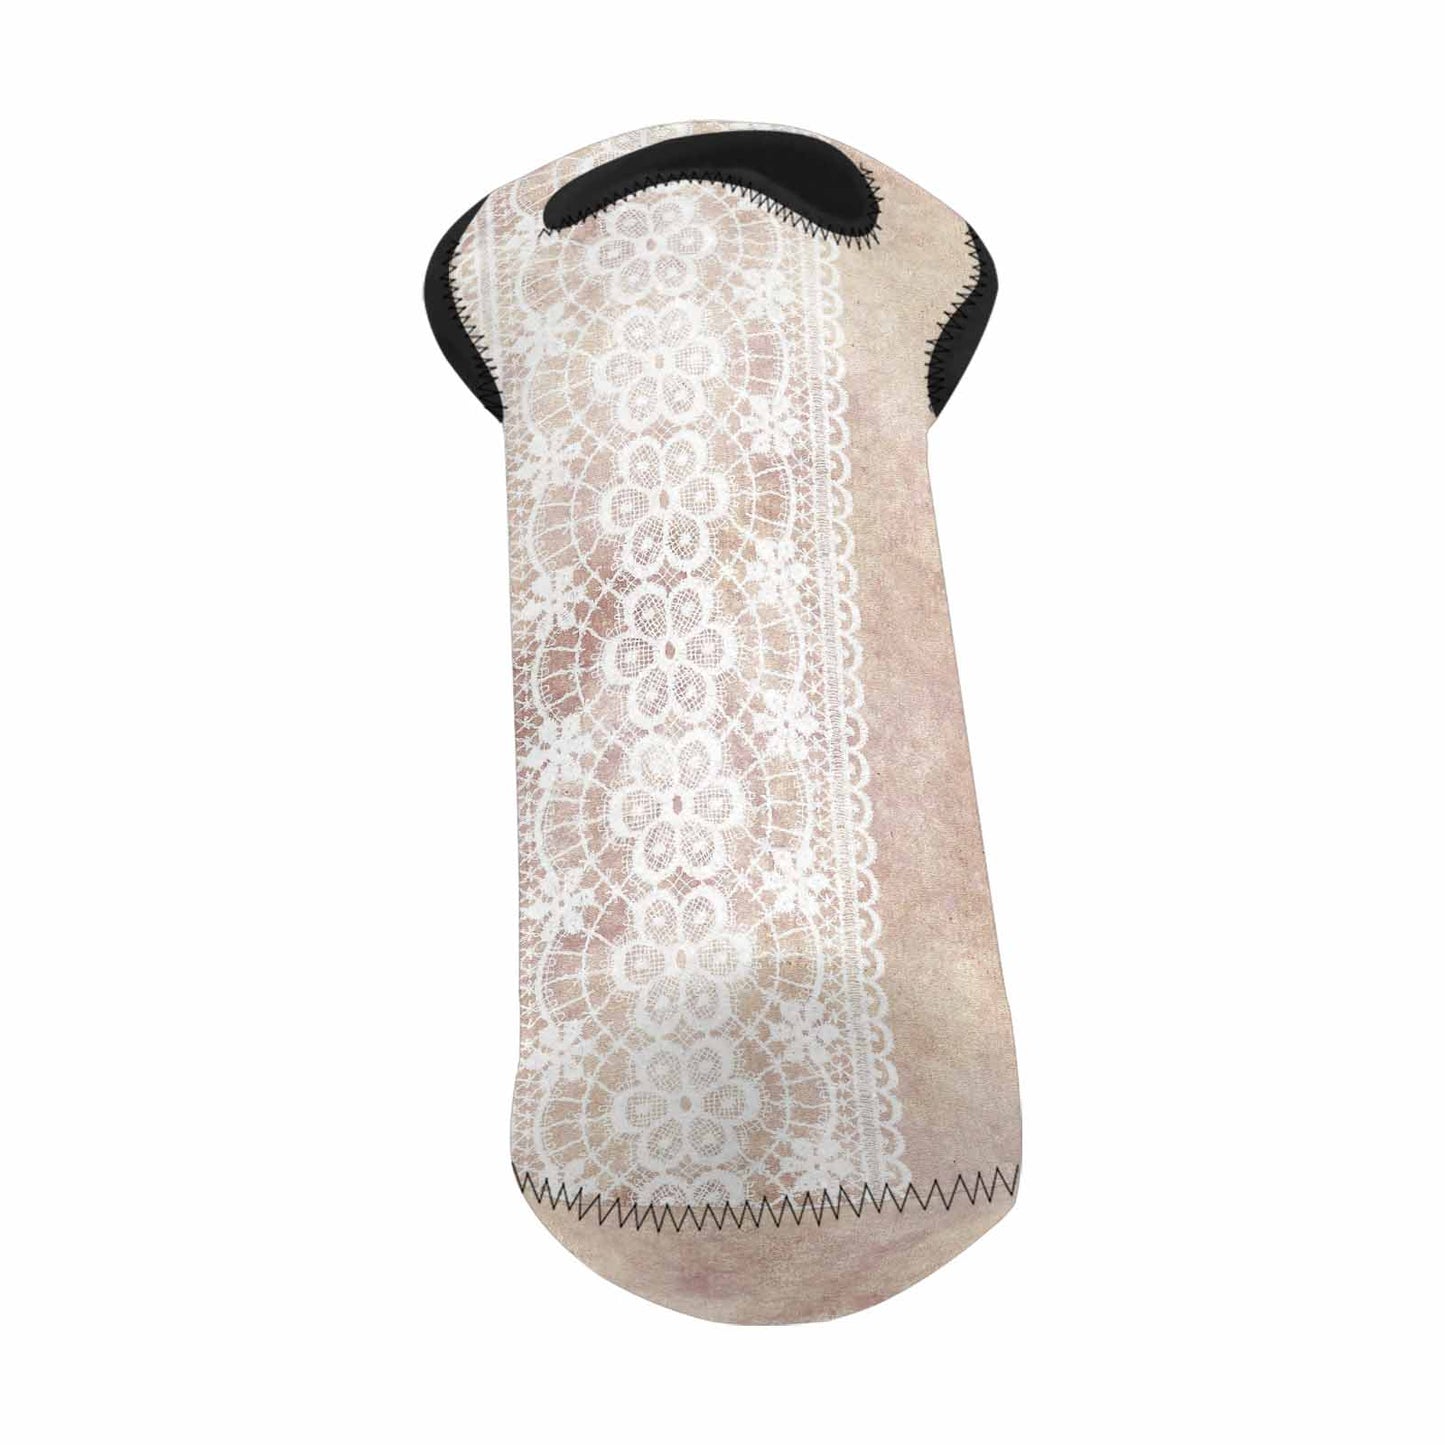 Victorian Lace 1 bottle wine bag, design 35